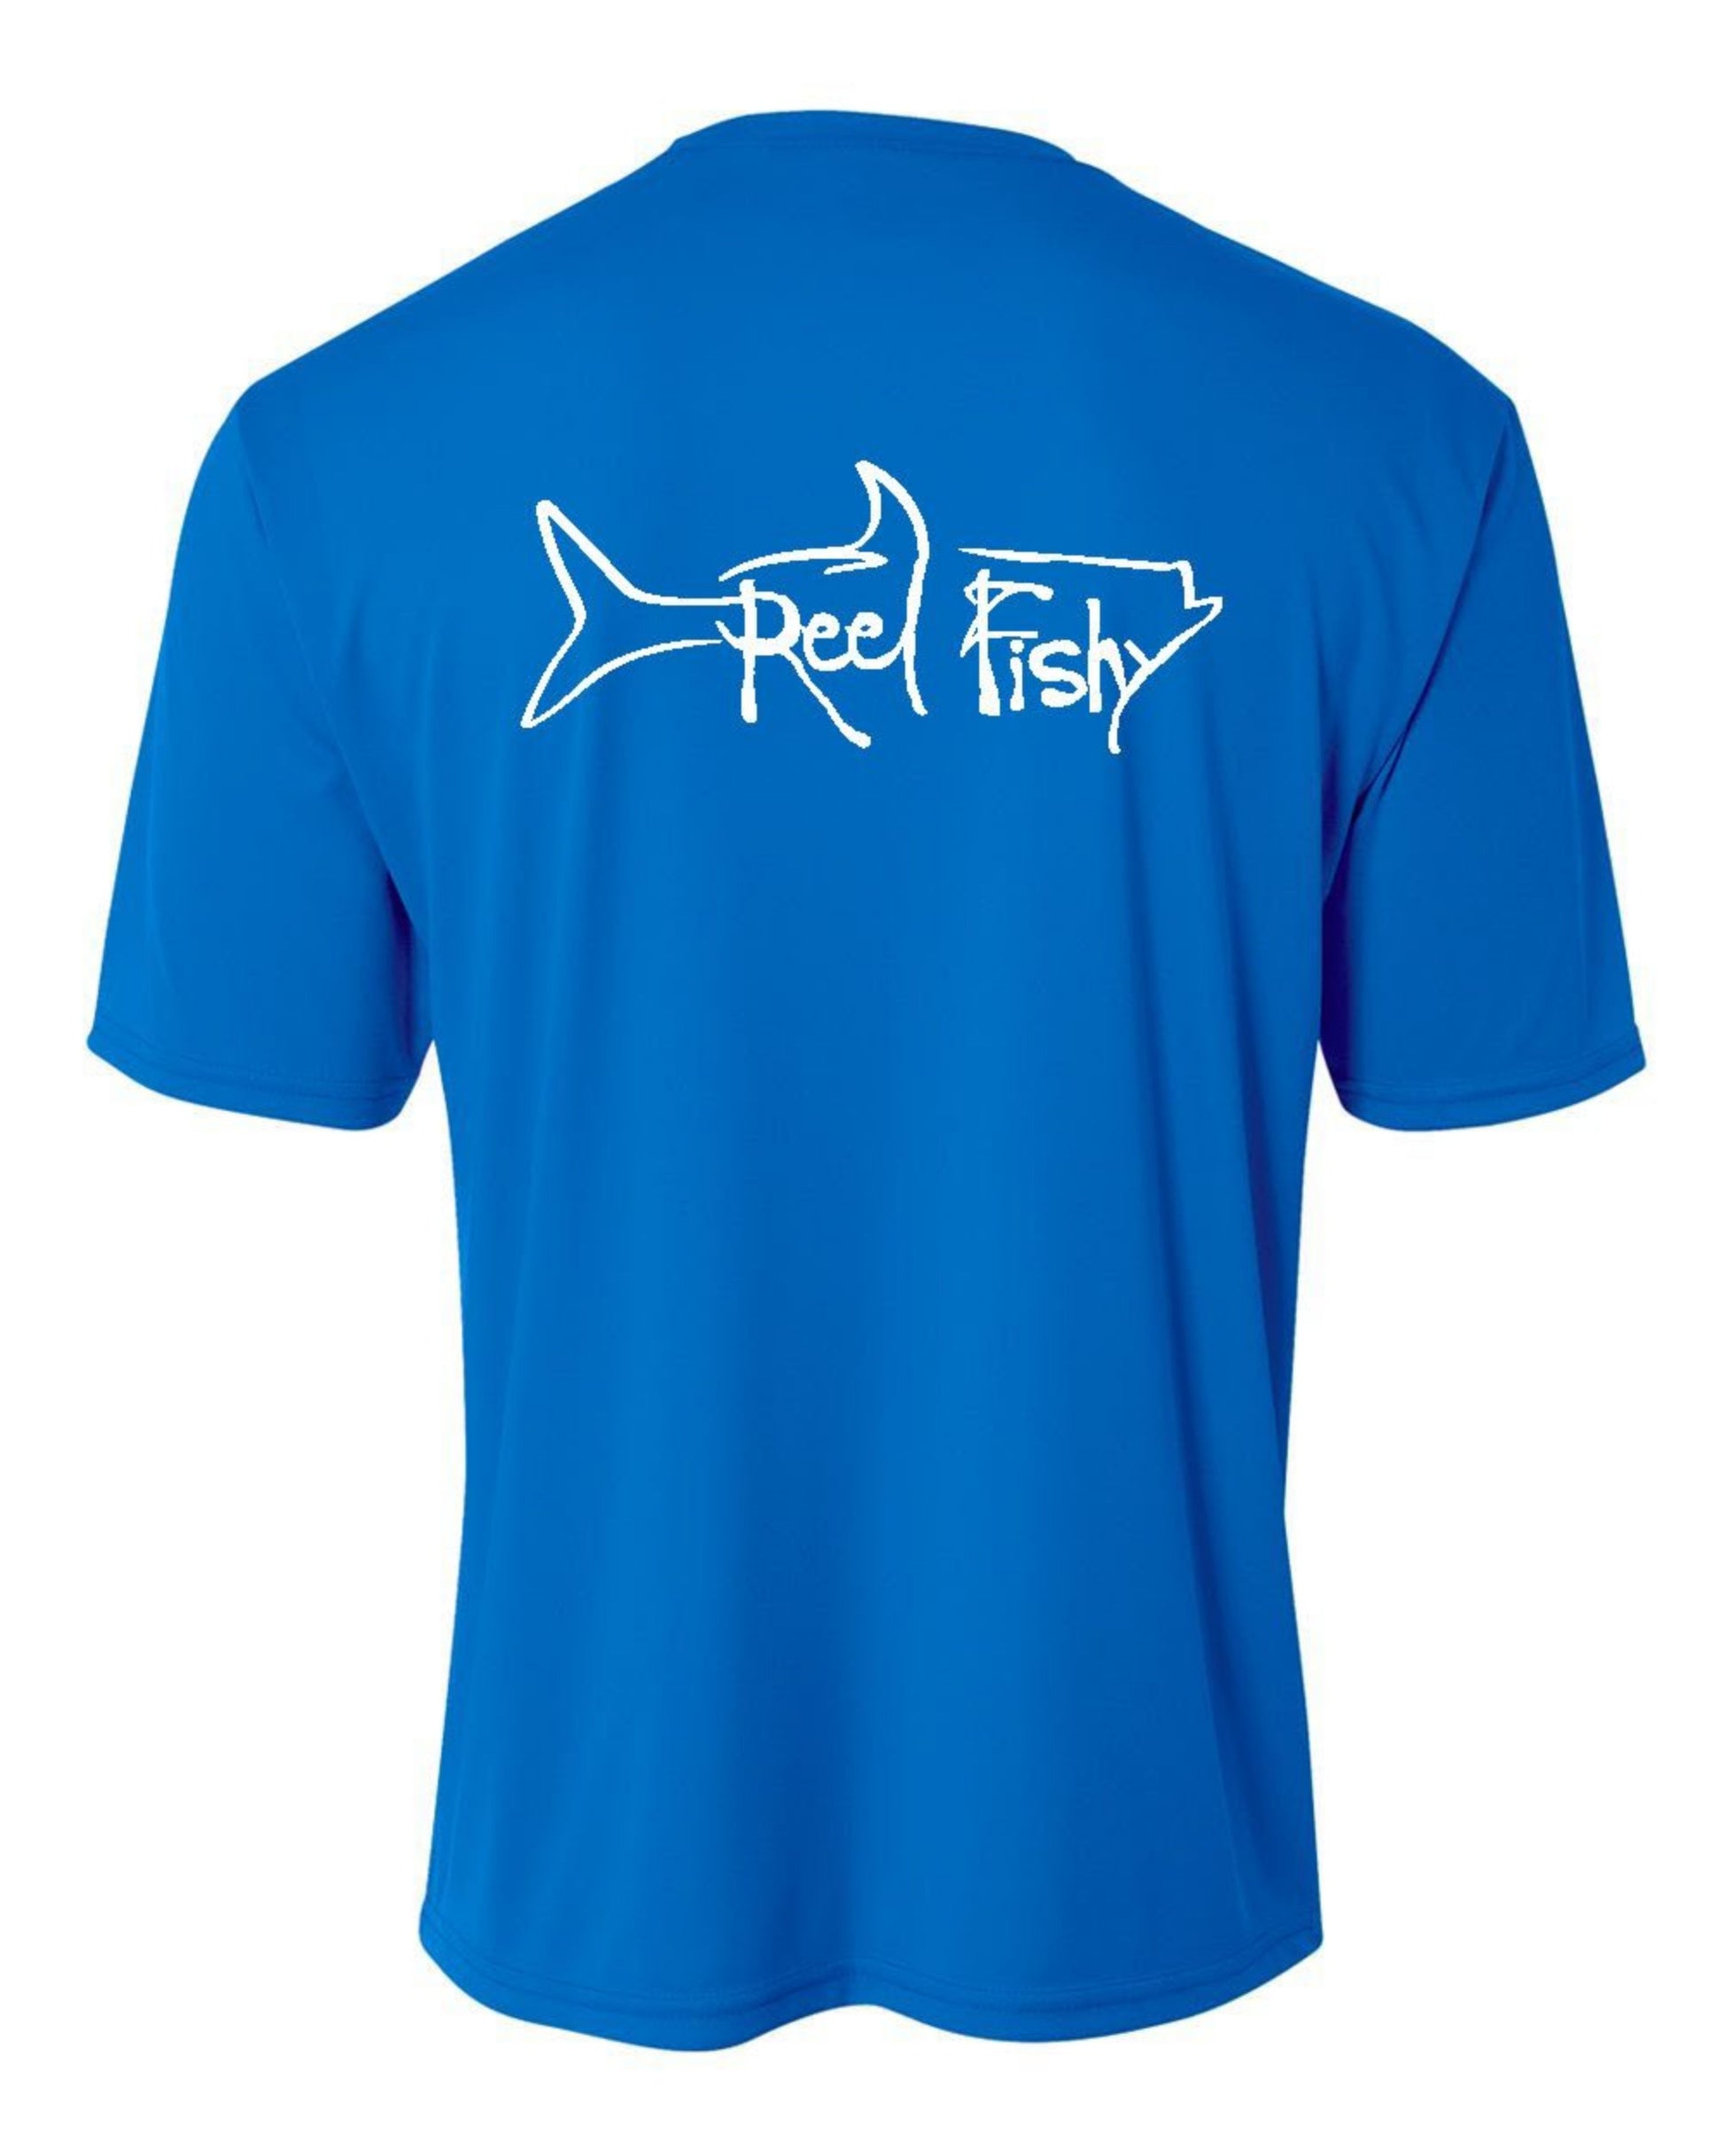 Youth Performance Dry-Fit Tarpon Fishing Shirts 50+Upf Sun Protection - Reel Fishy Apparel M / Royal S/S